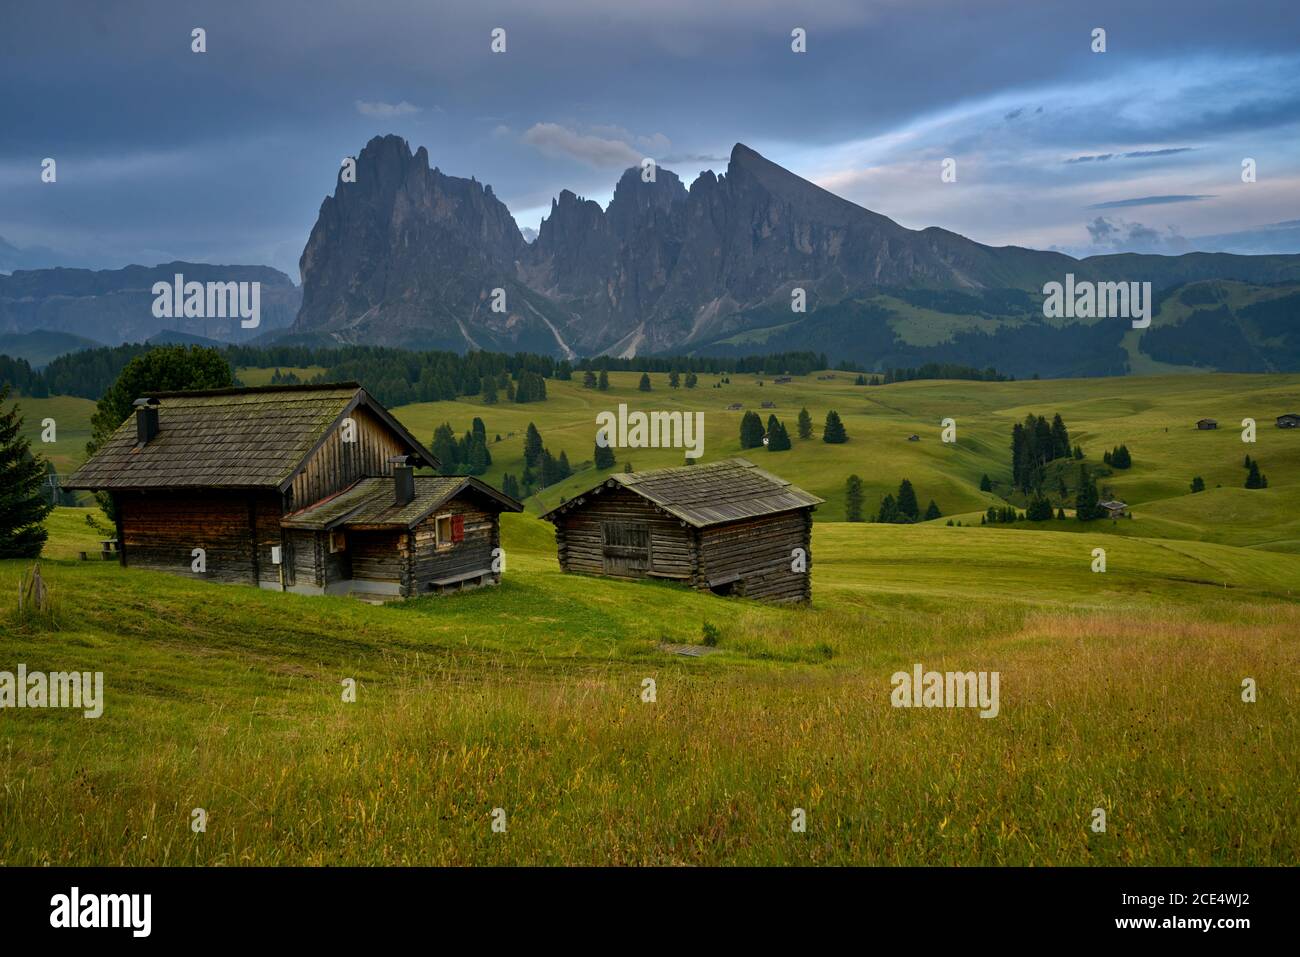 Sassolungo mountains on the Italian Alps Dolomites with wood houses on the foreground Stock Photo